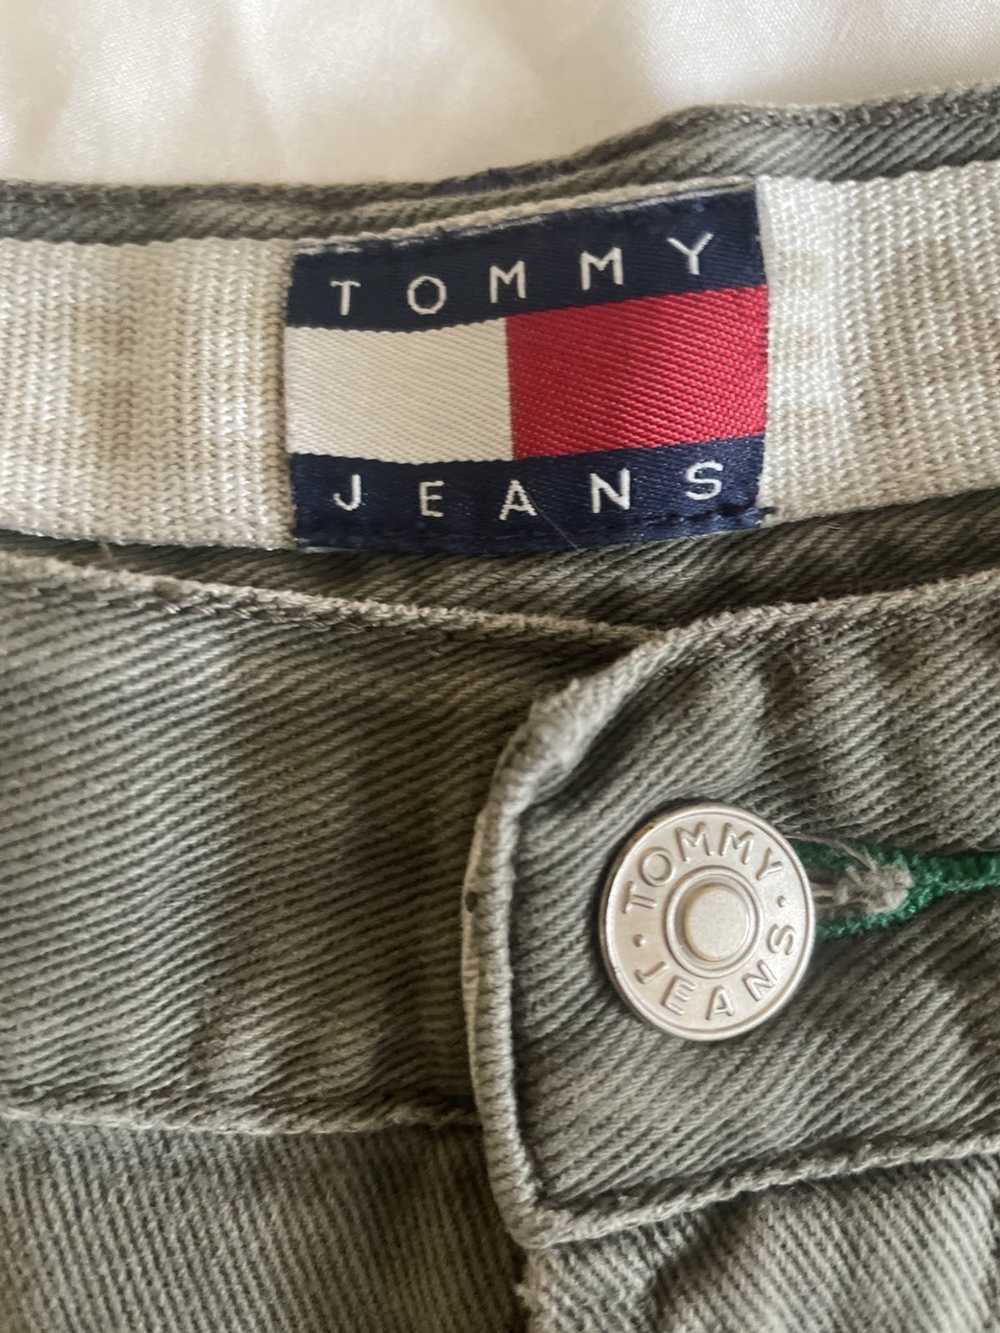 Tommy Hilfiger Vintage Timmy shorts - image 4